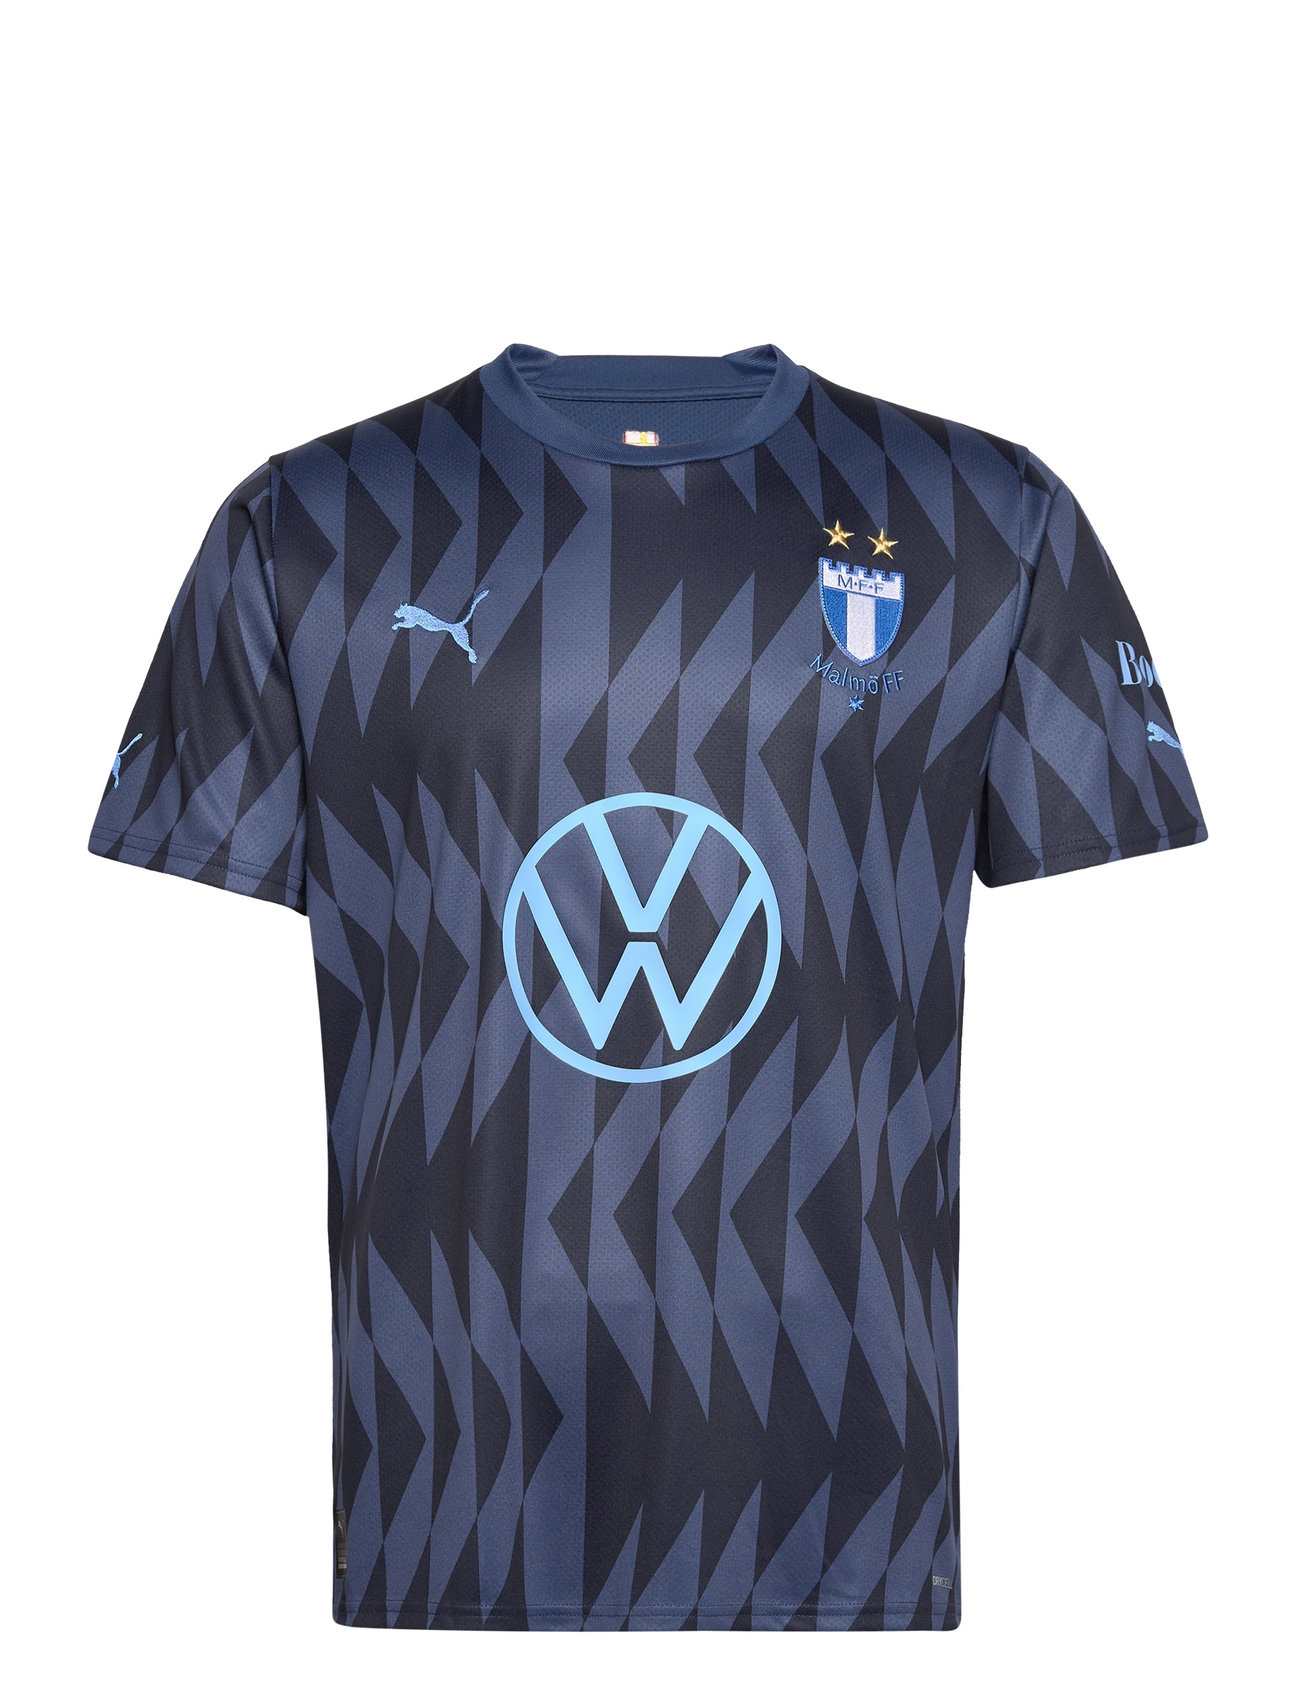 Malmo Away Jersey Replica Sport T-shirts Football Shirts Blue MALMÖ FF